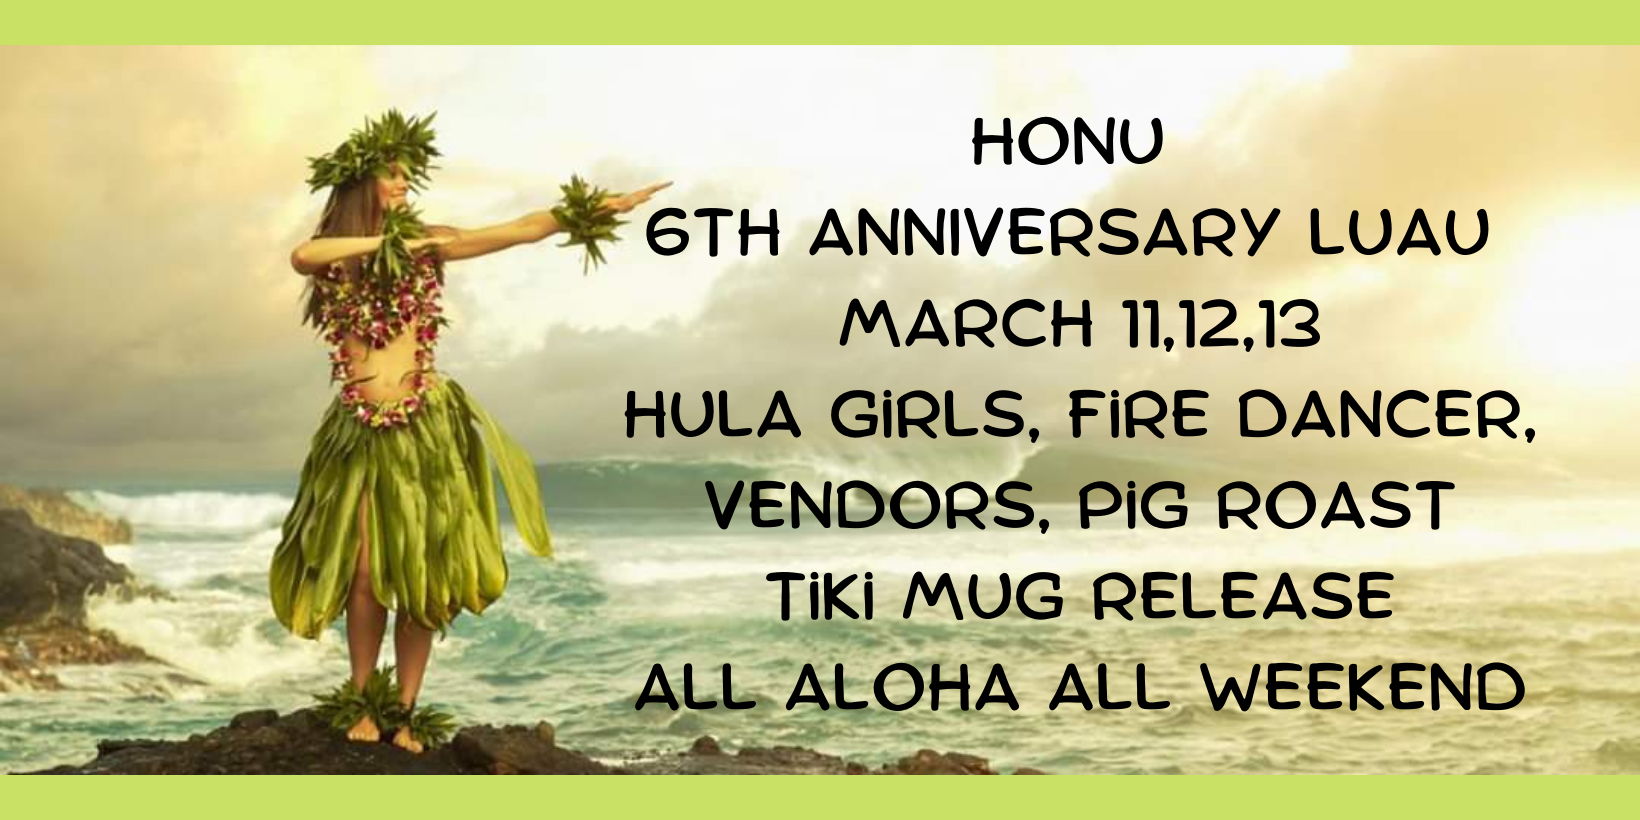 Honu 6th Anniversary Luau promotional image